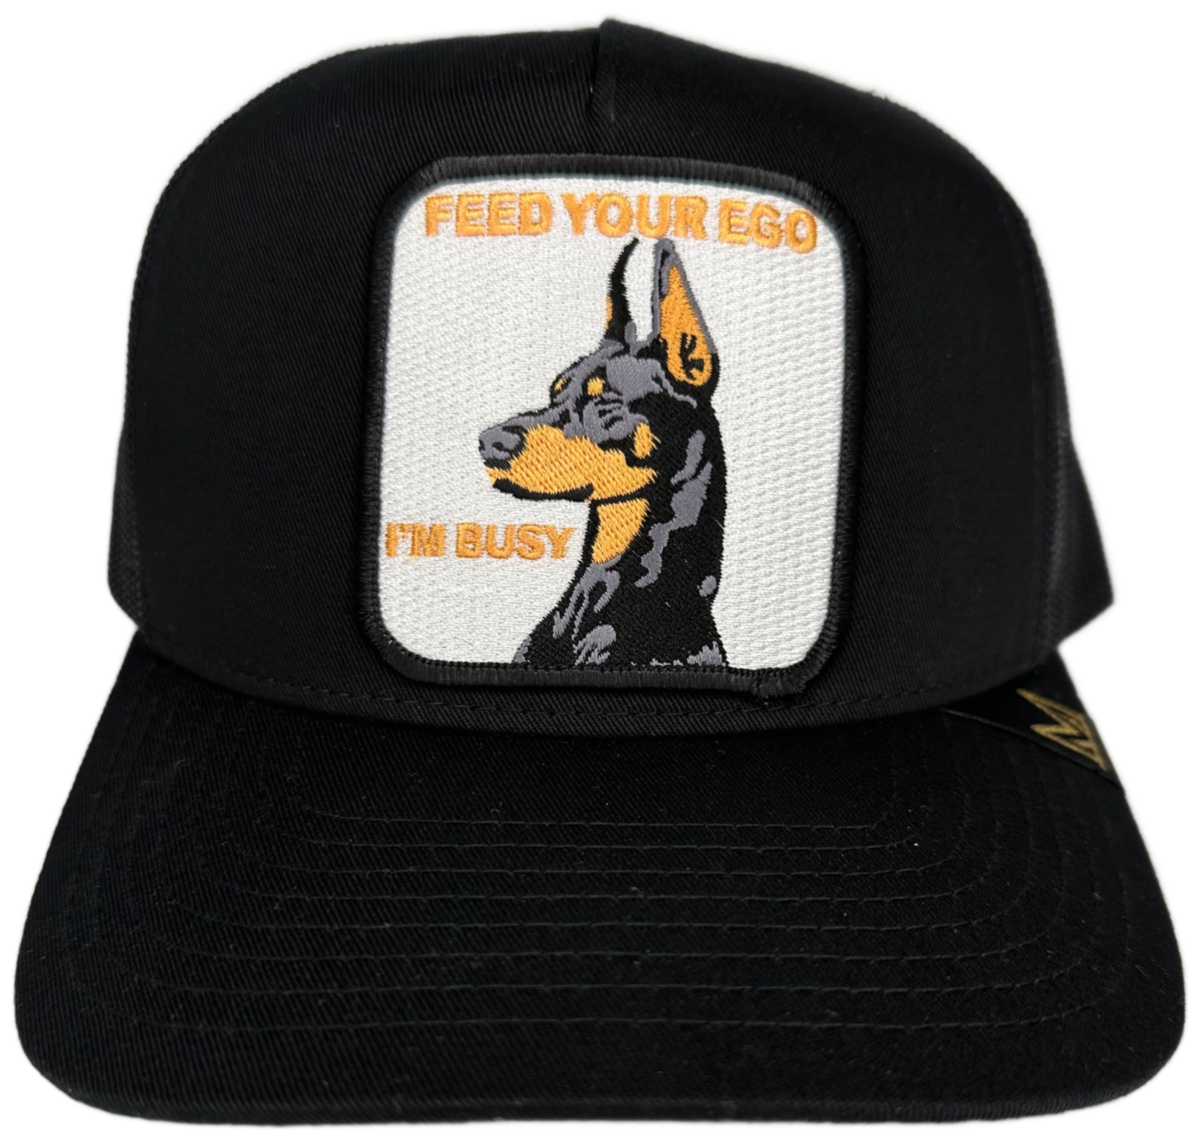 MV Dad Hats - Feed Your Ego Trucker Hat - Black/Black